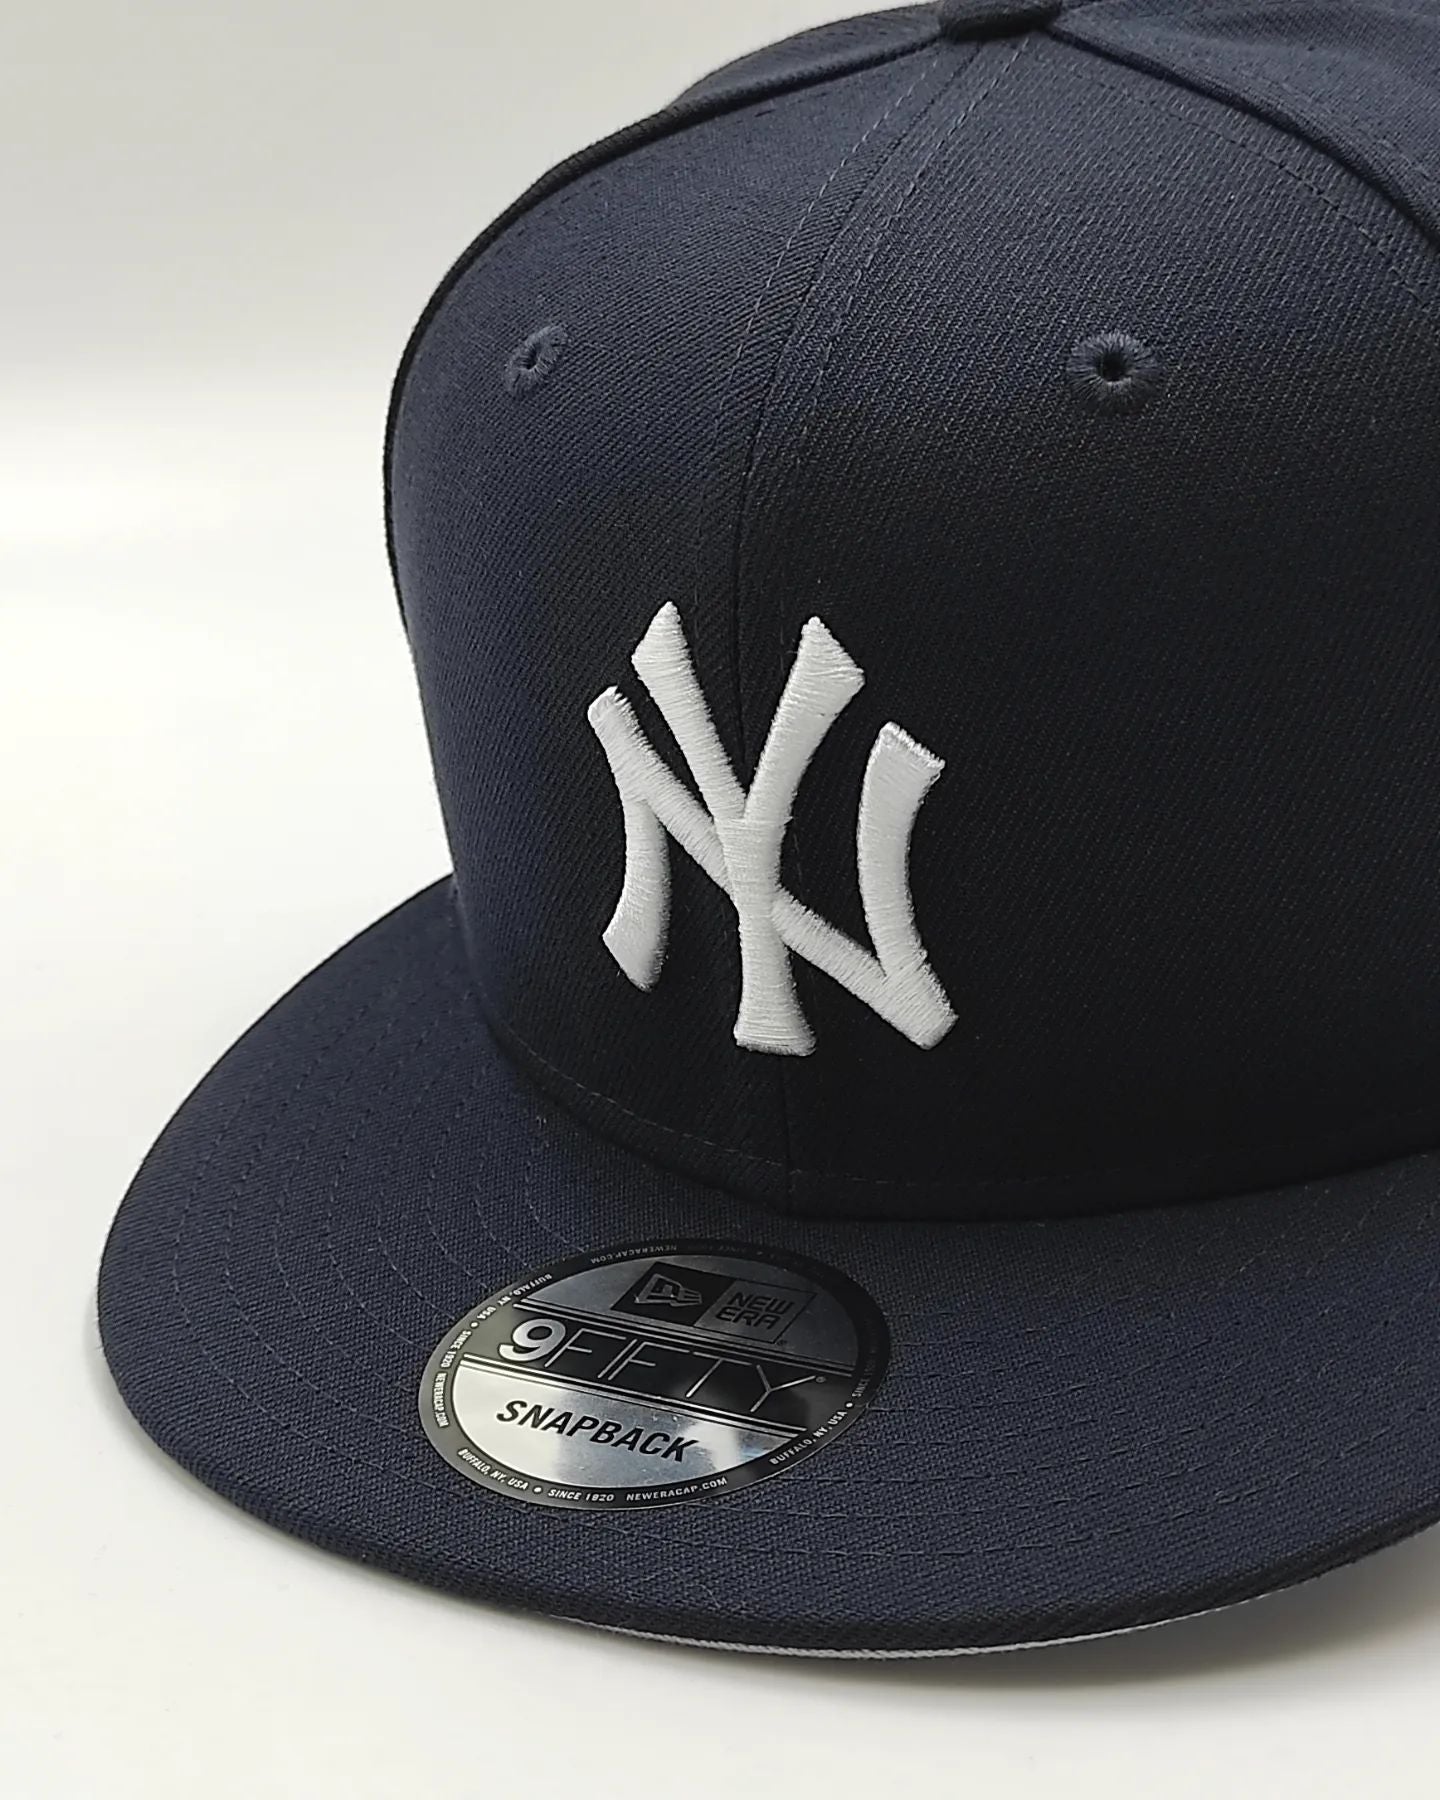 New Era New York Yankees 9fifty Snapback clasica